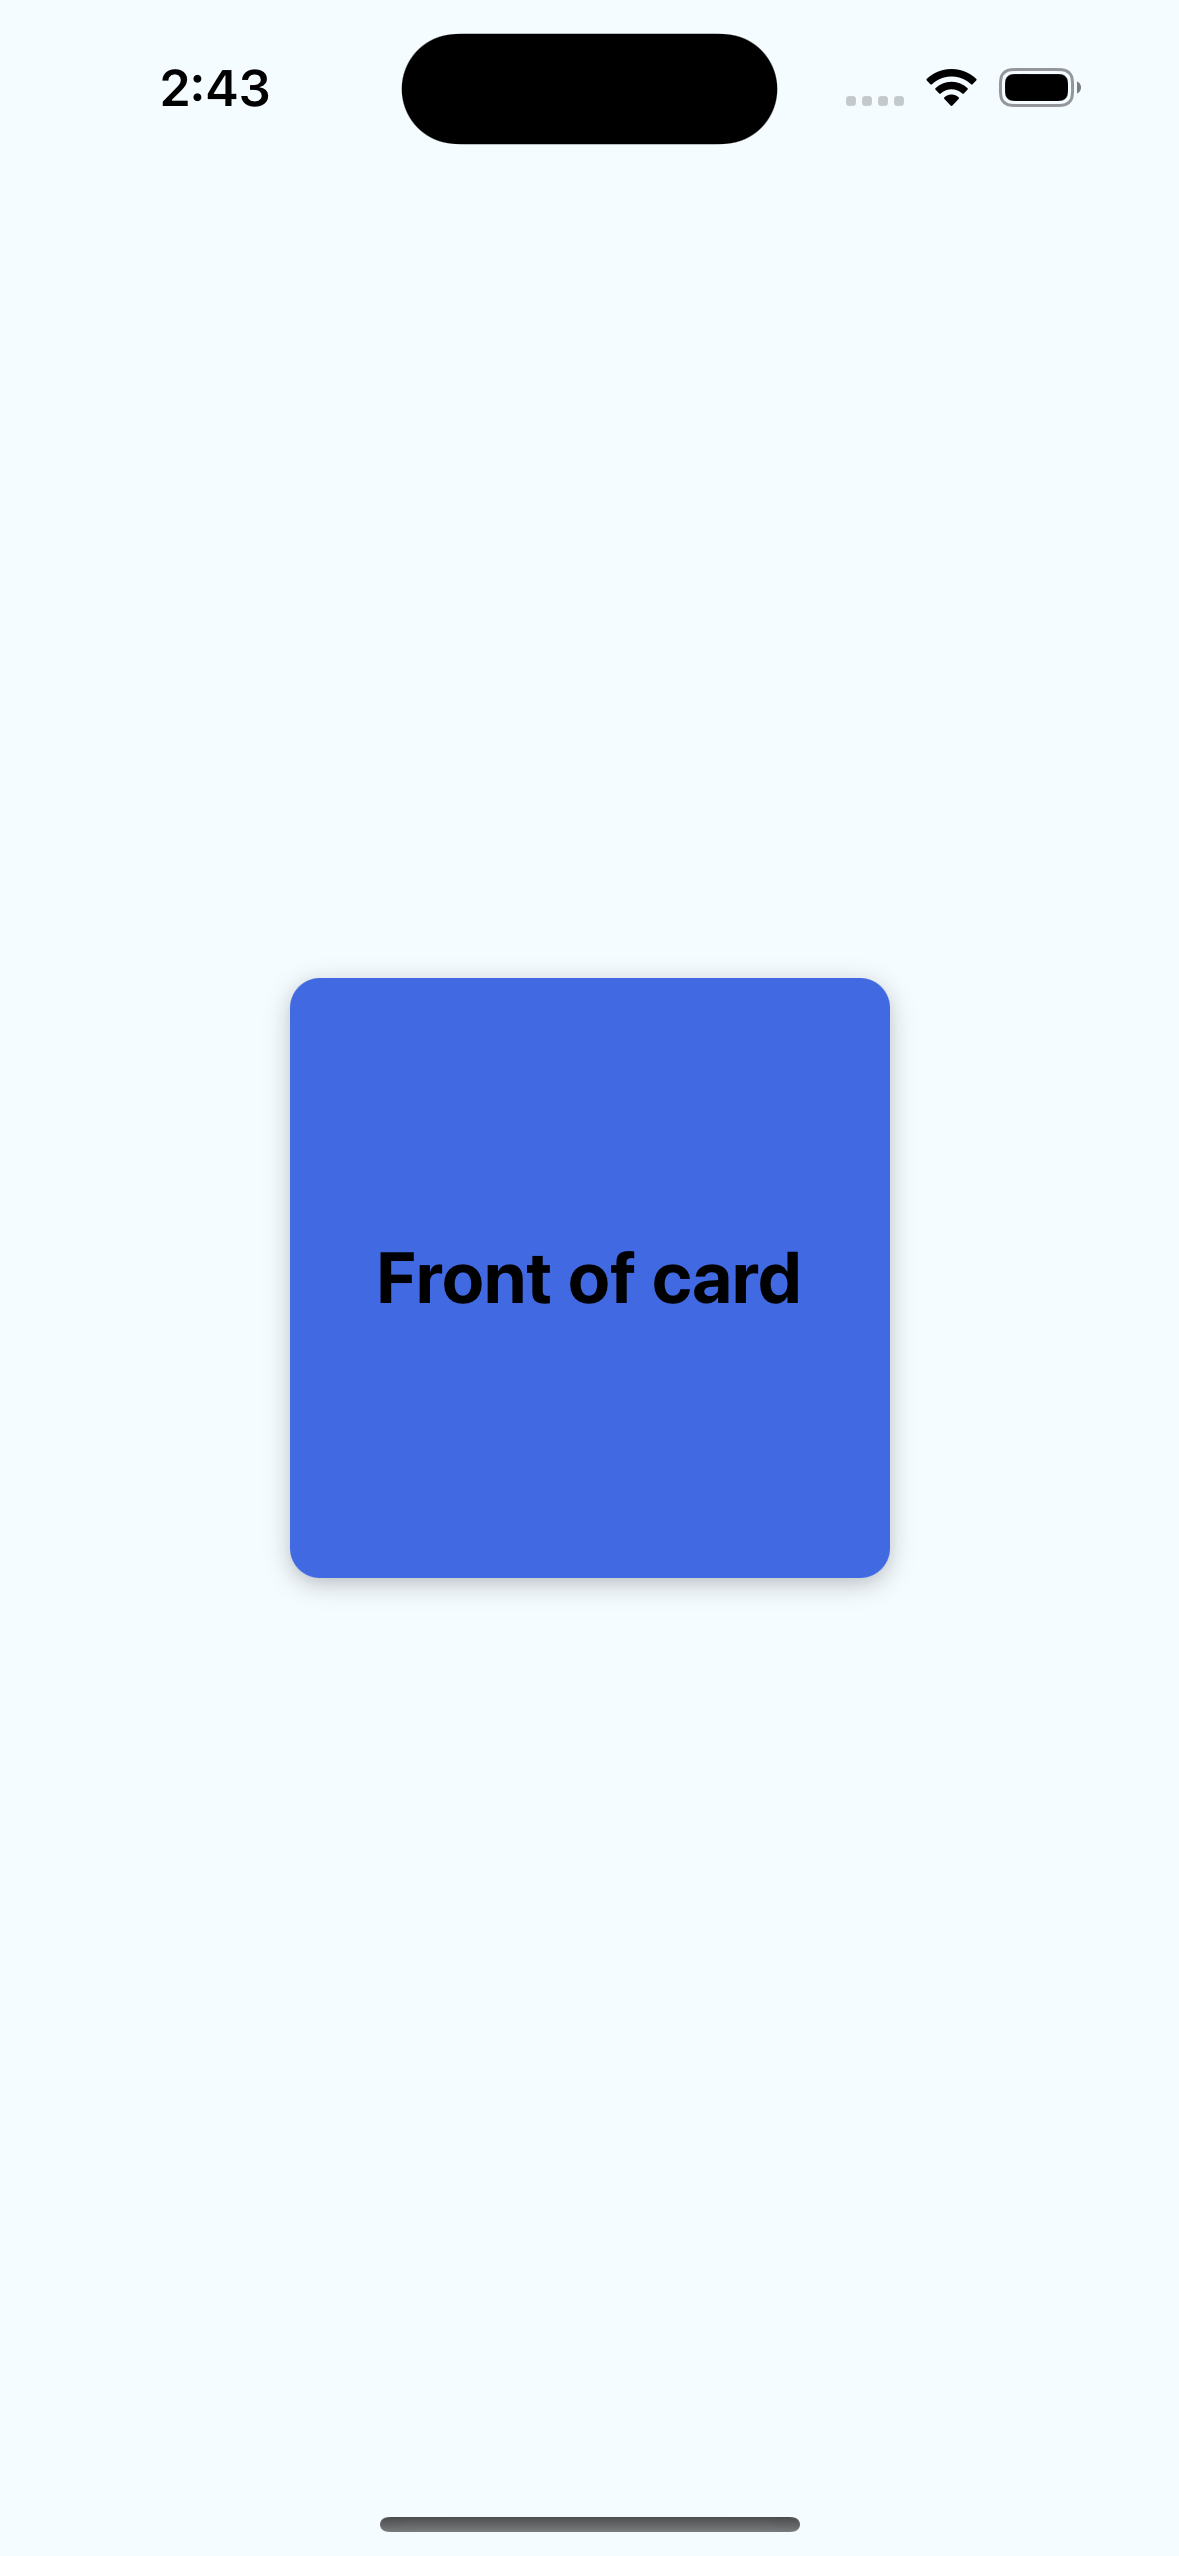 React native template. simple flip card